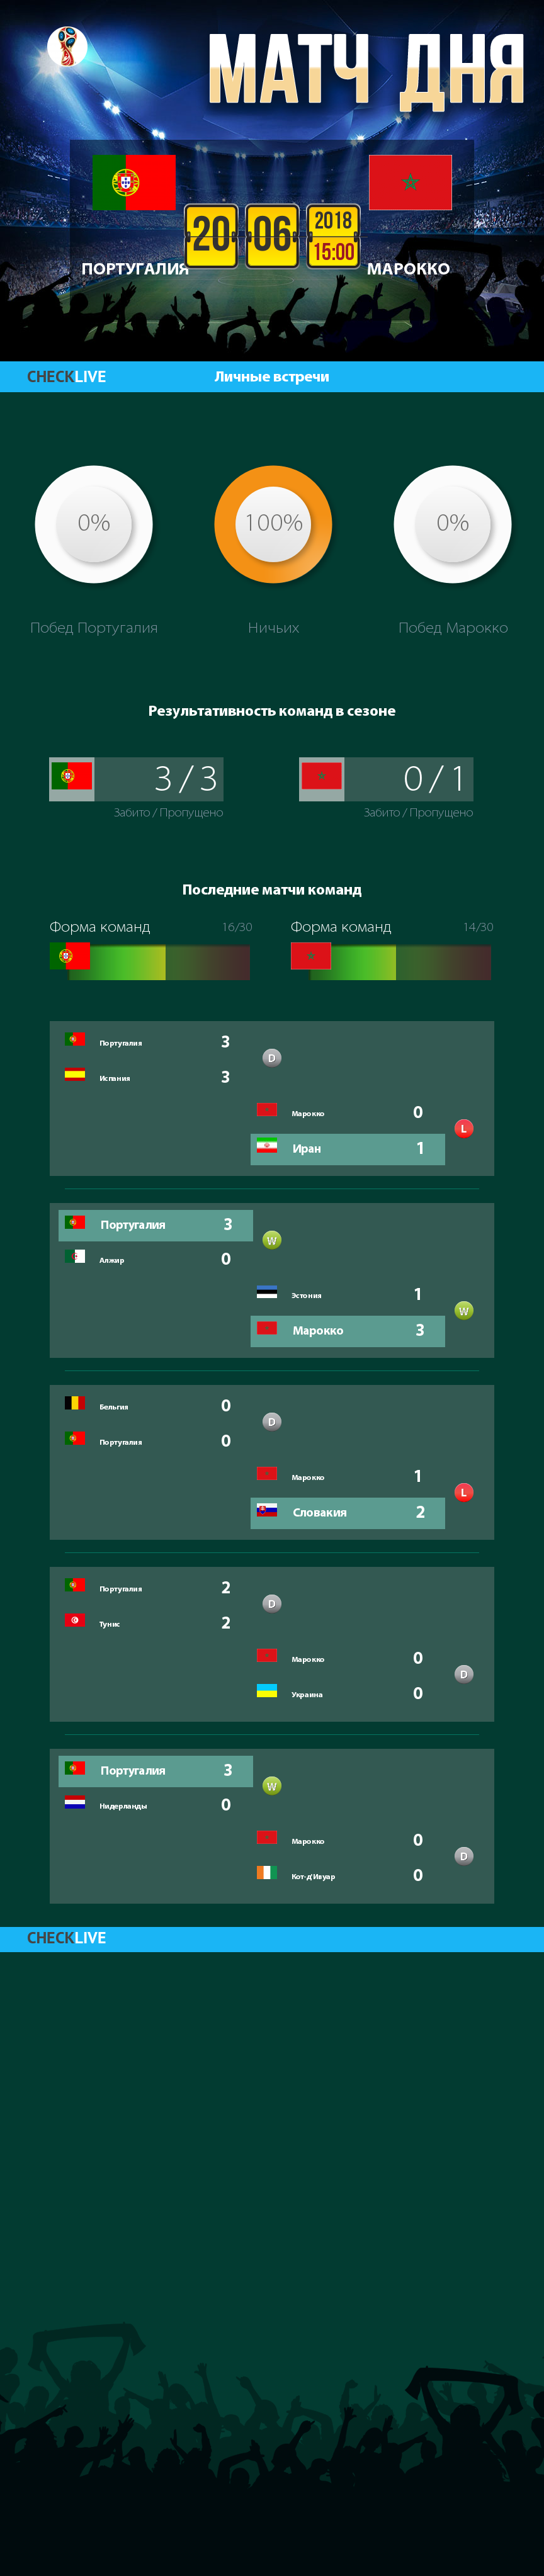 Инфографика Португалия и Марокко матч дня 20.06.2018